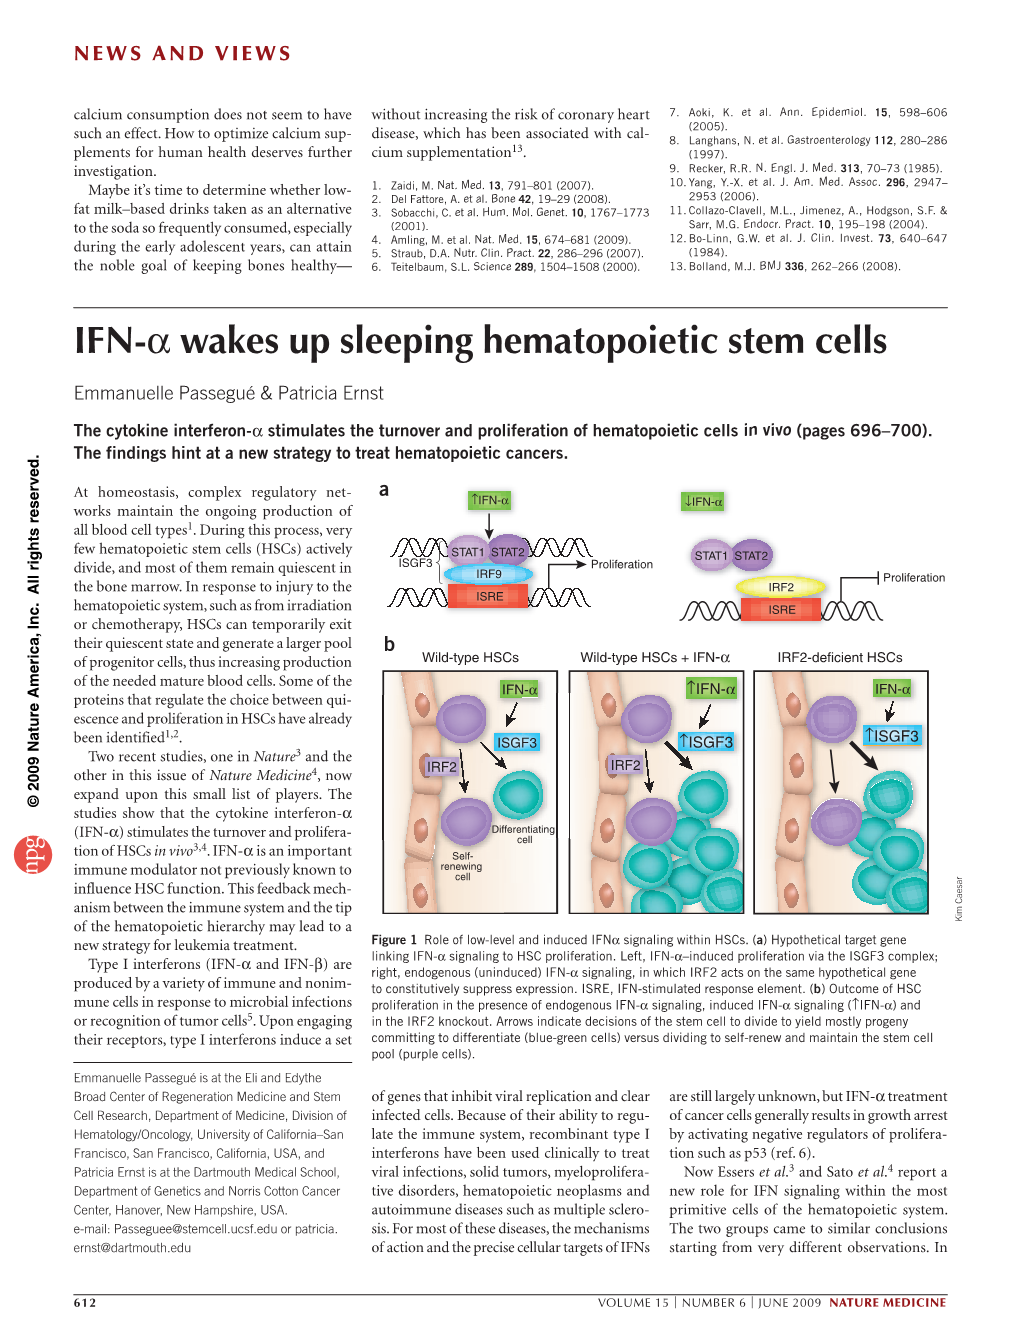 IFN-Α Wakes up Sleeping Hematopoietic Stem Cells